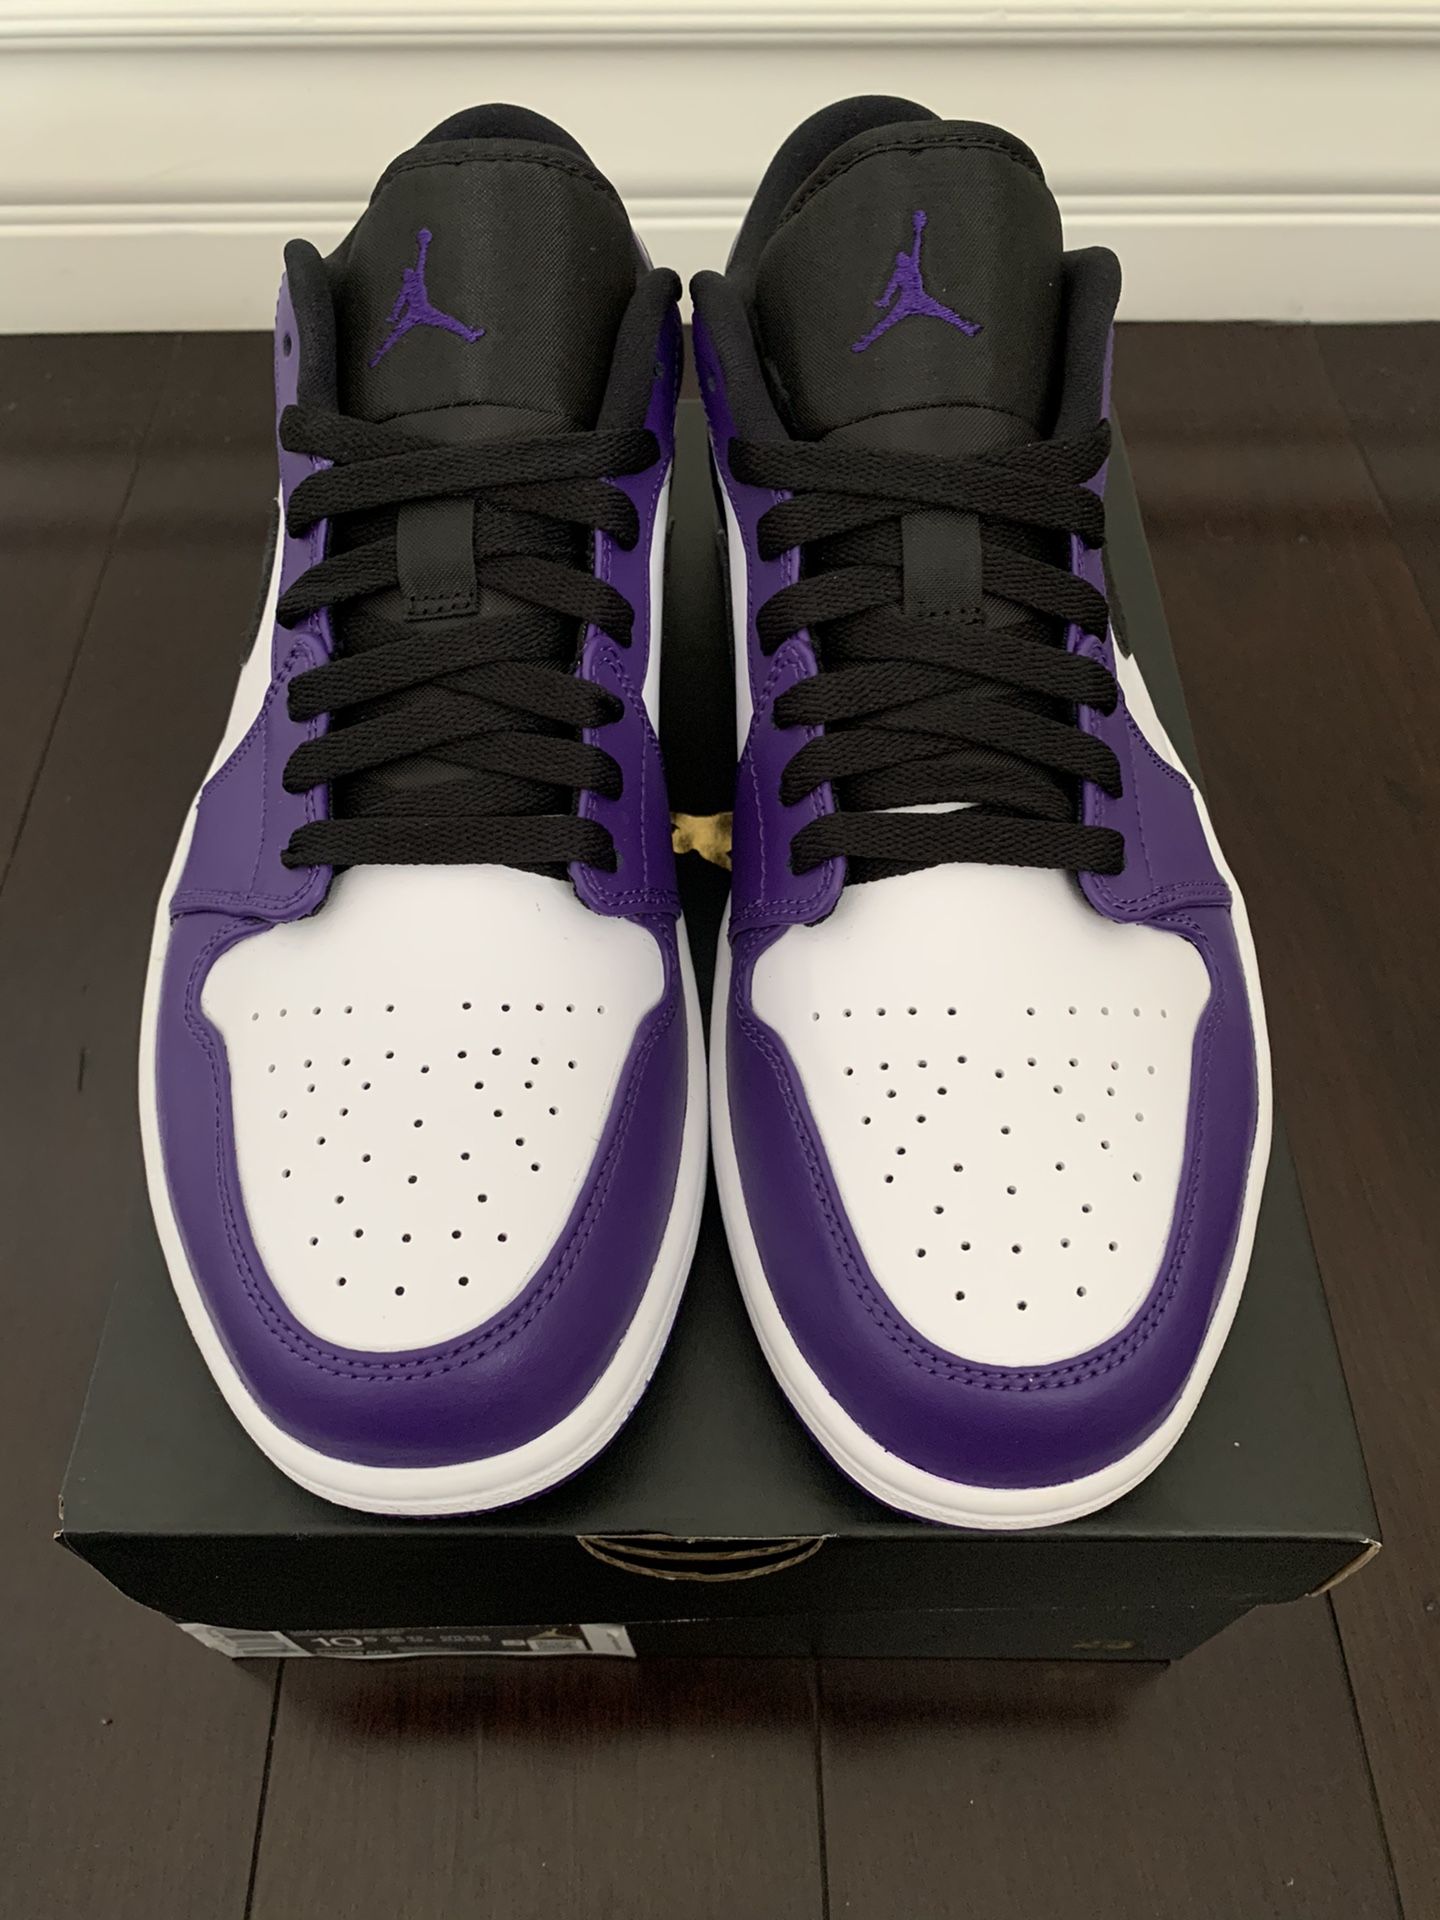 Jordan 1 Low Court Purple Lakers Size 10.5